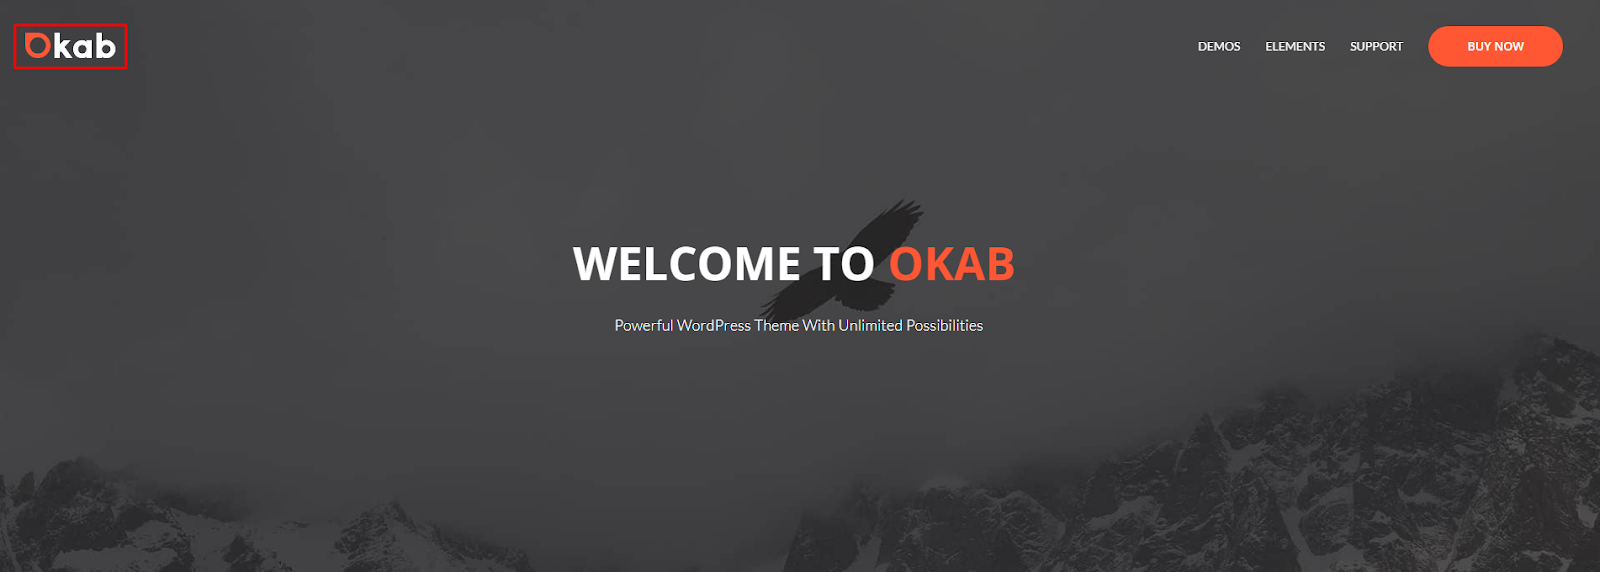 Okab - Multifunctional and responsive WP theme with RTL